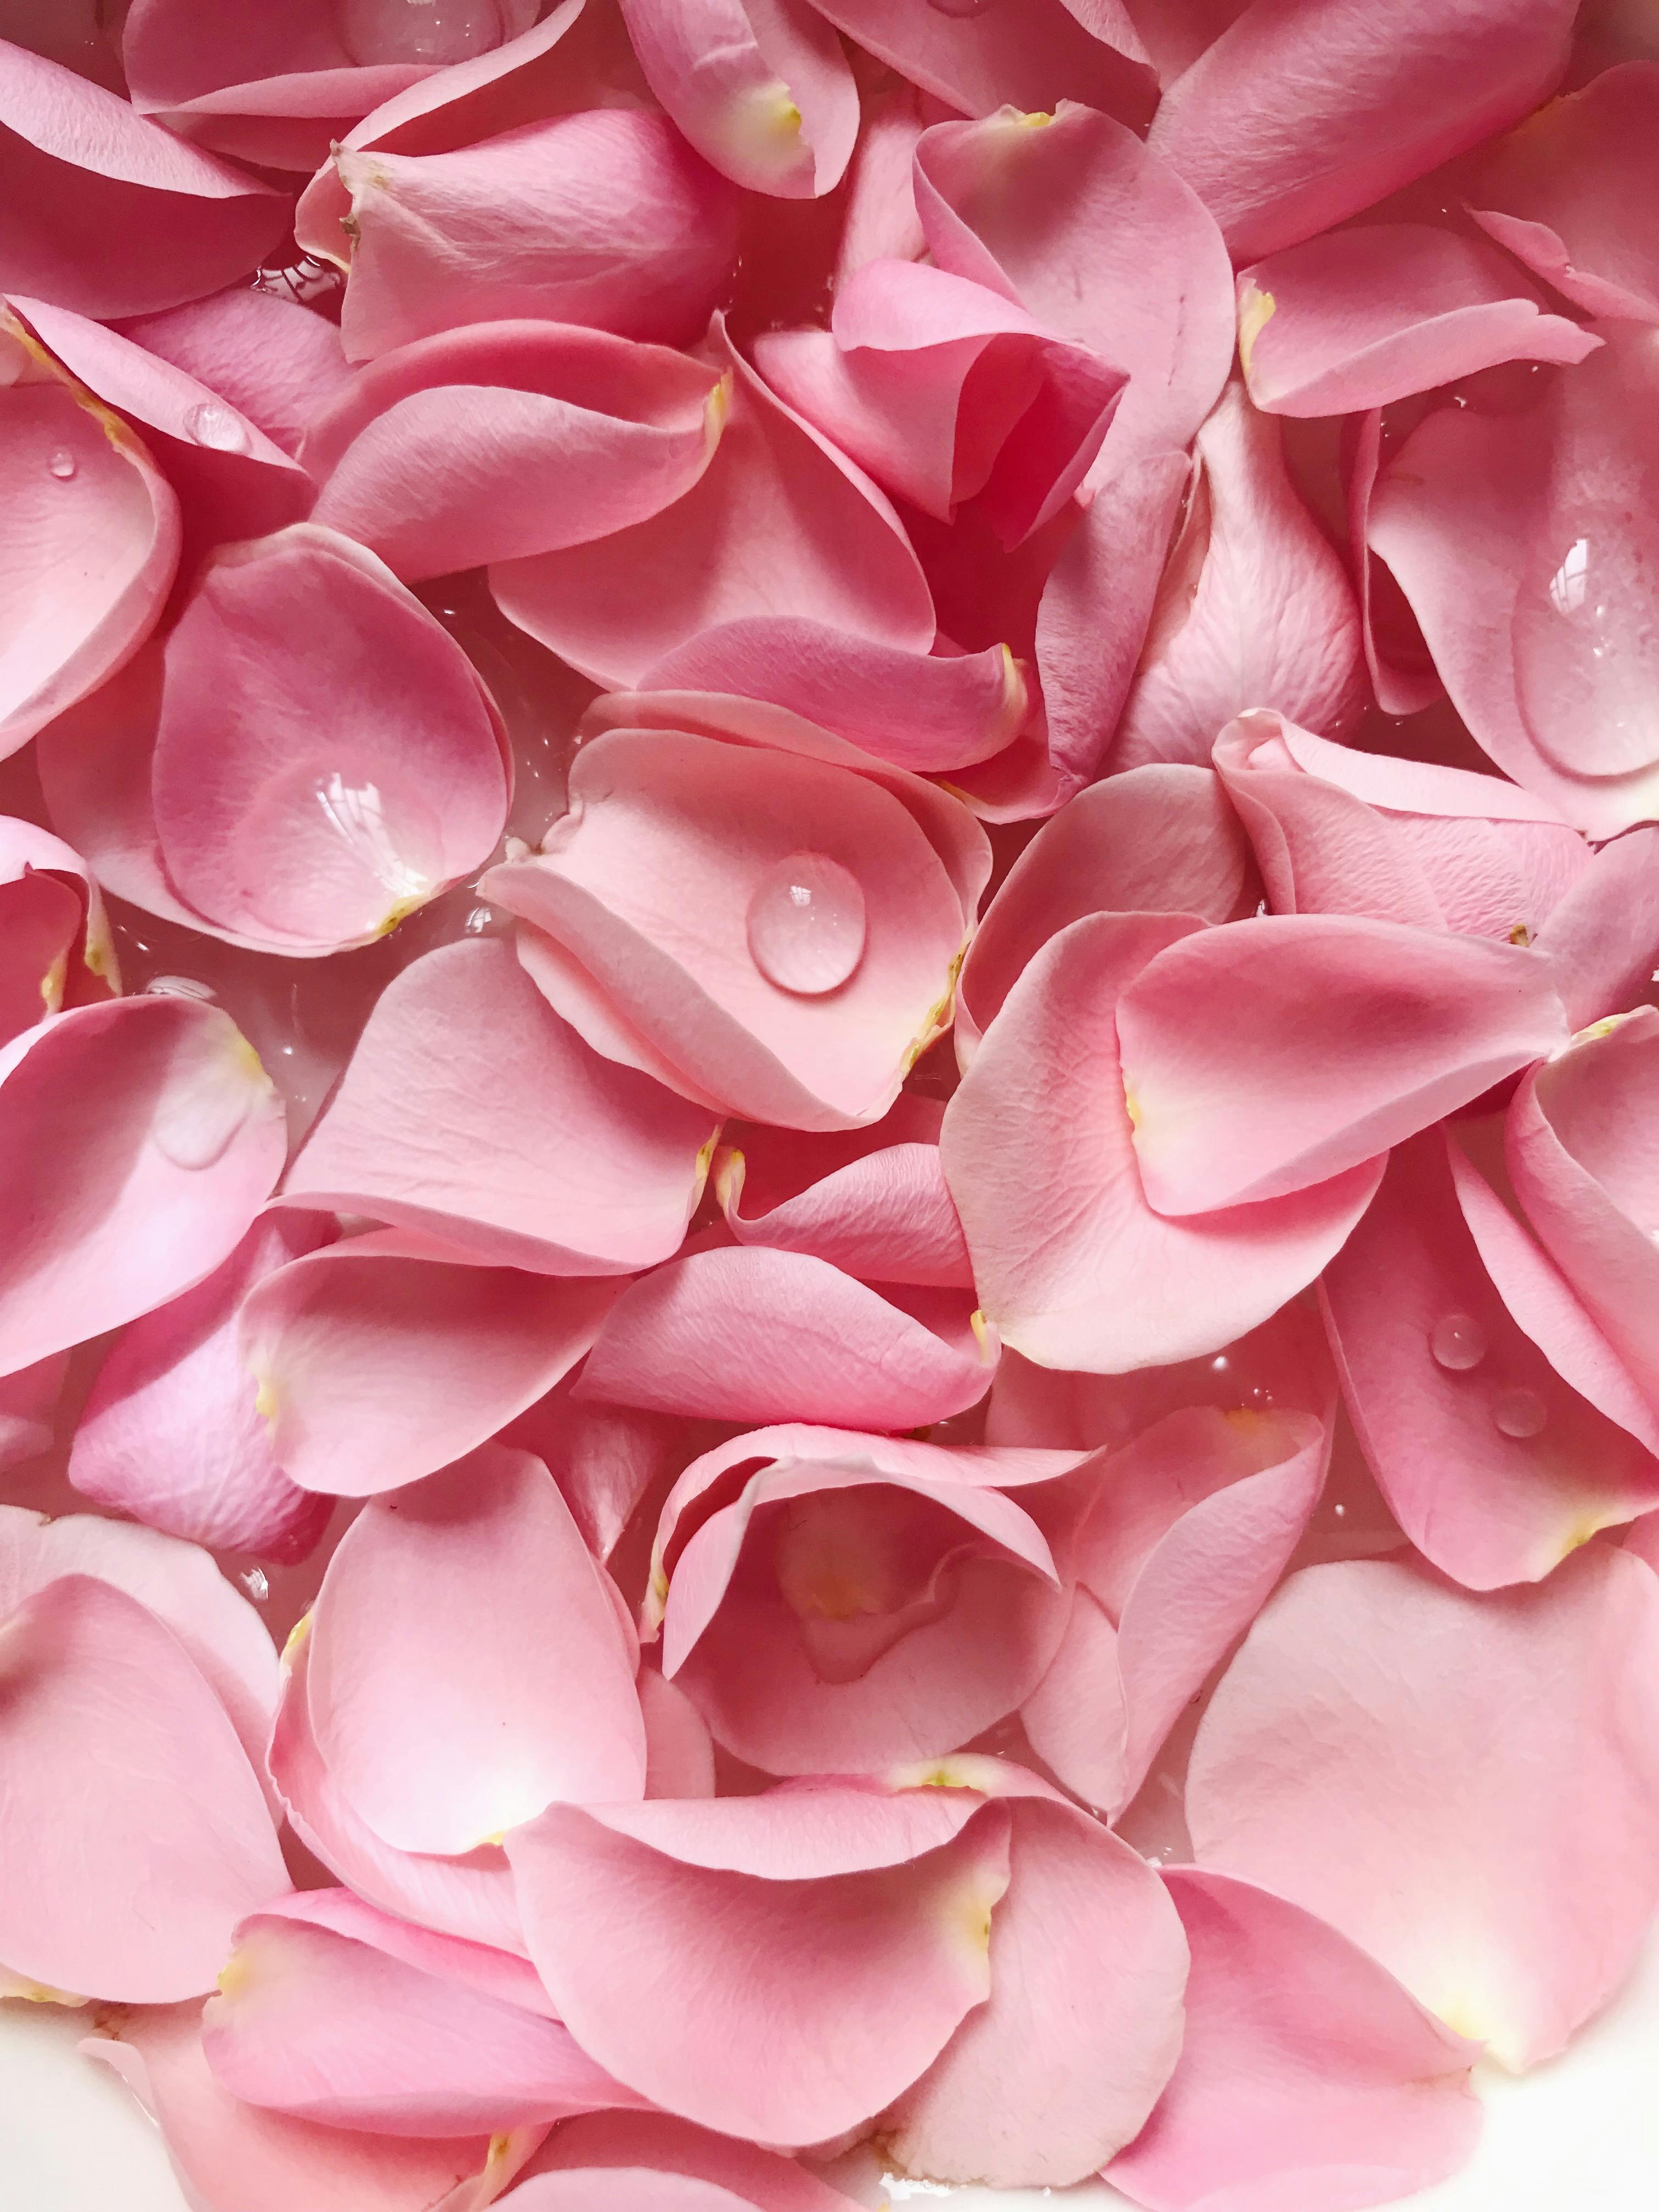 Rose Petals Photos, Download The BEST Free Rose Petals Stock